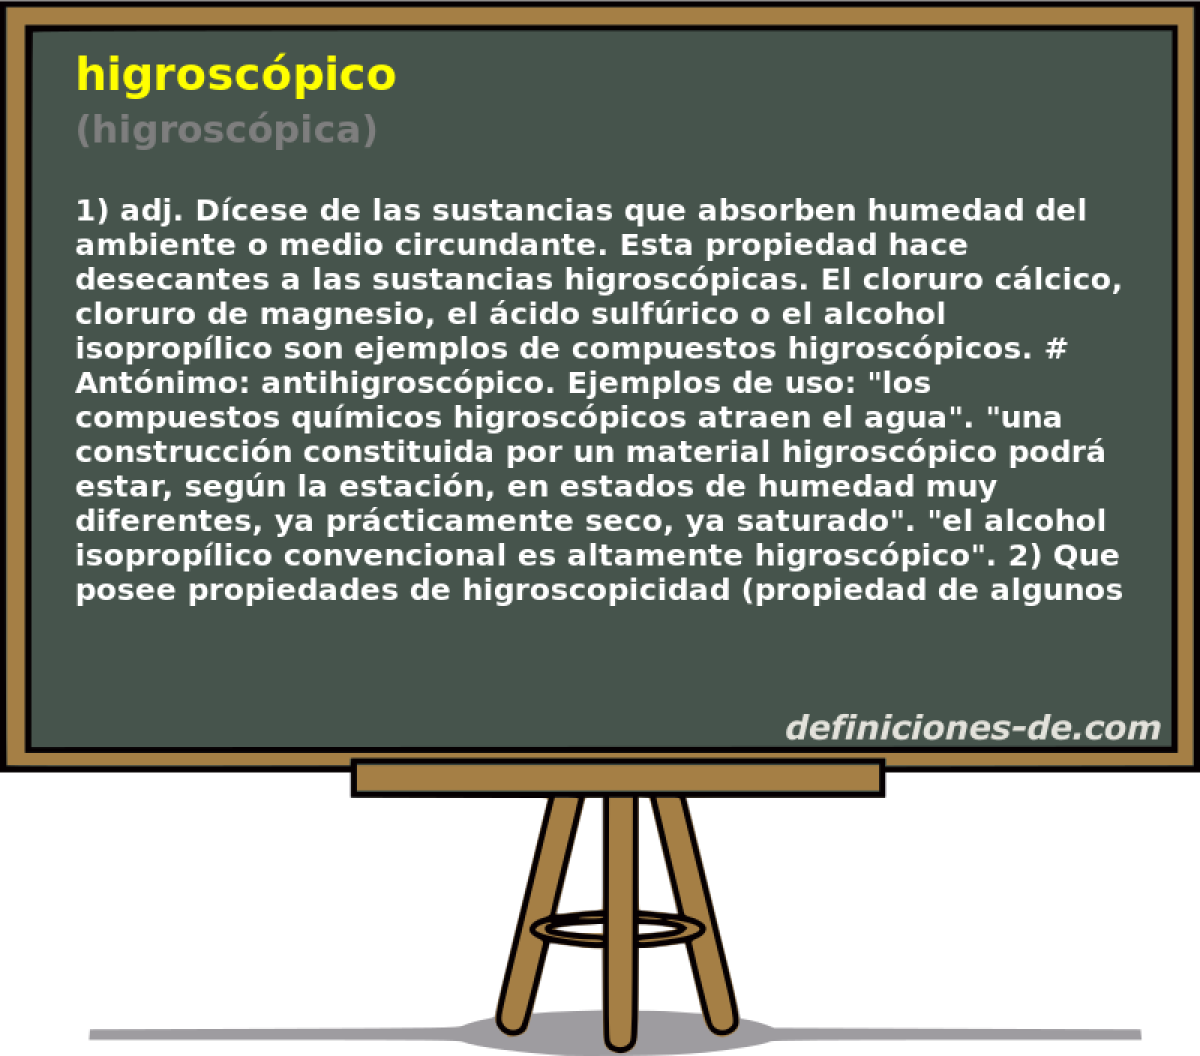 higroscpico (higroscpica)